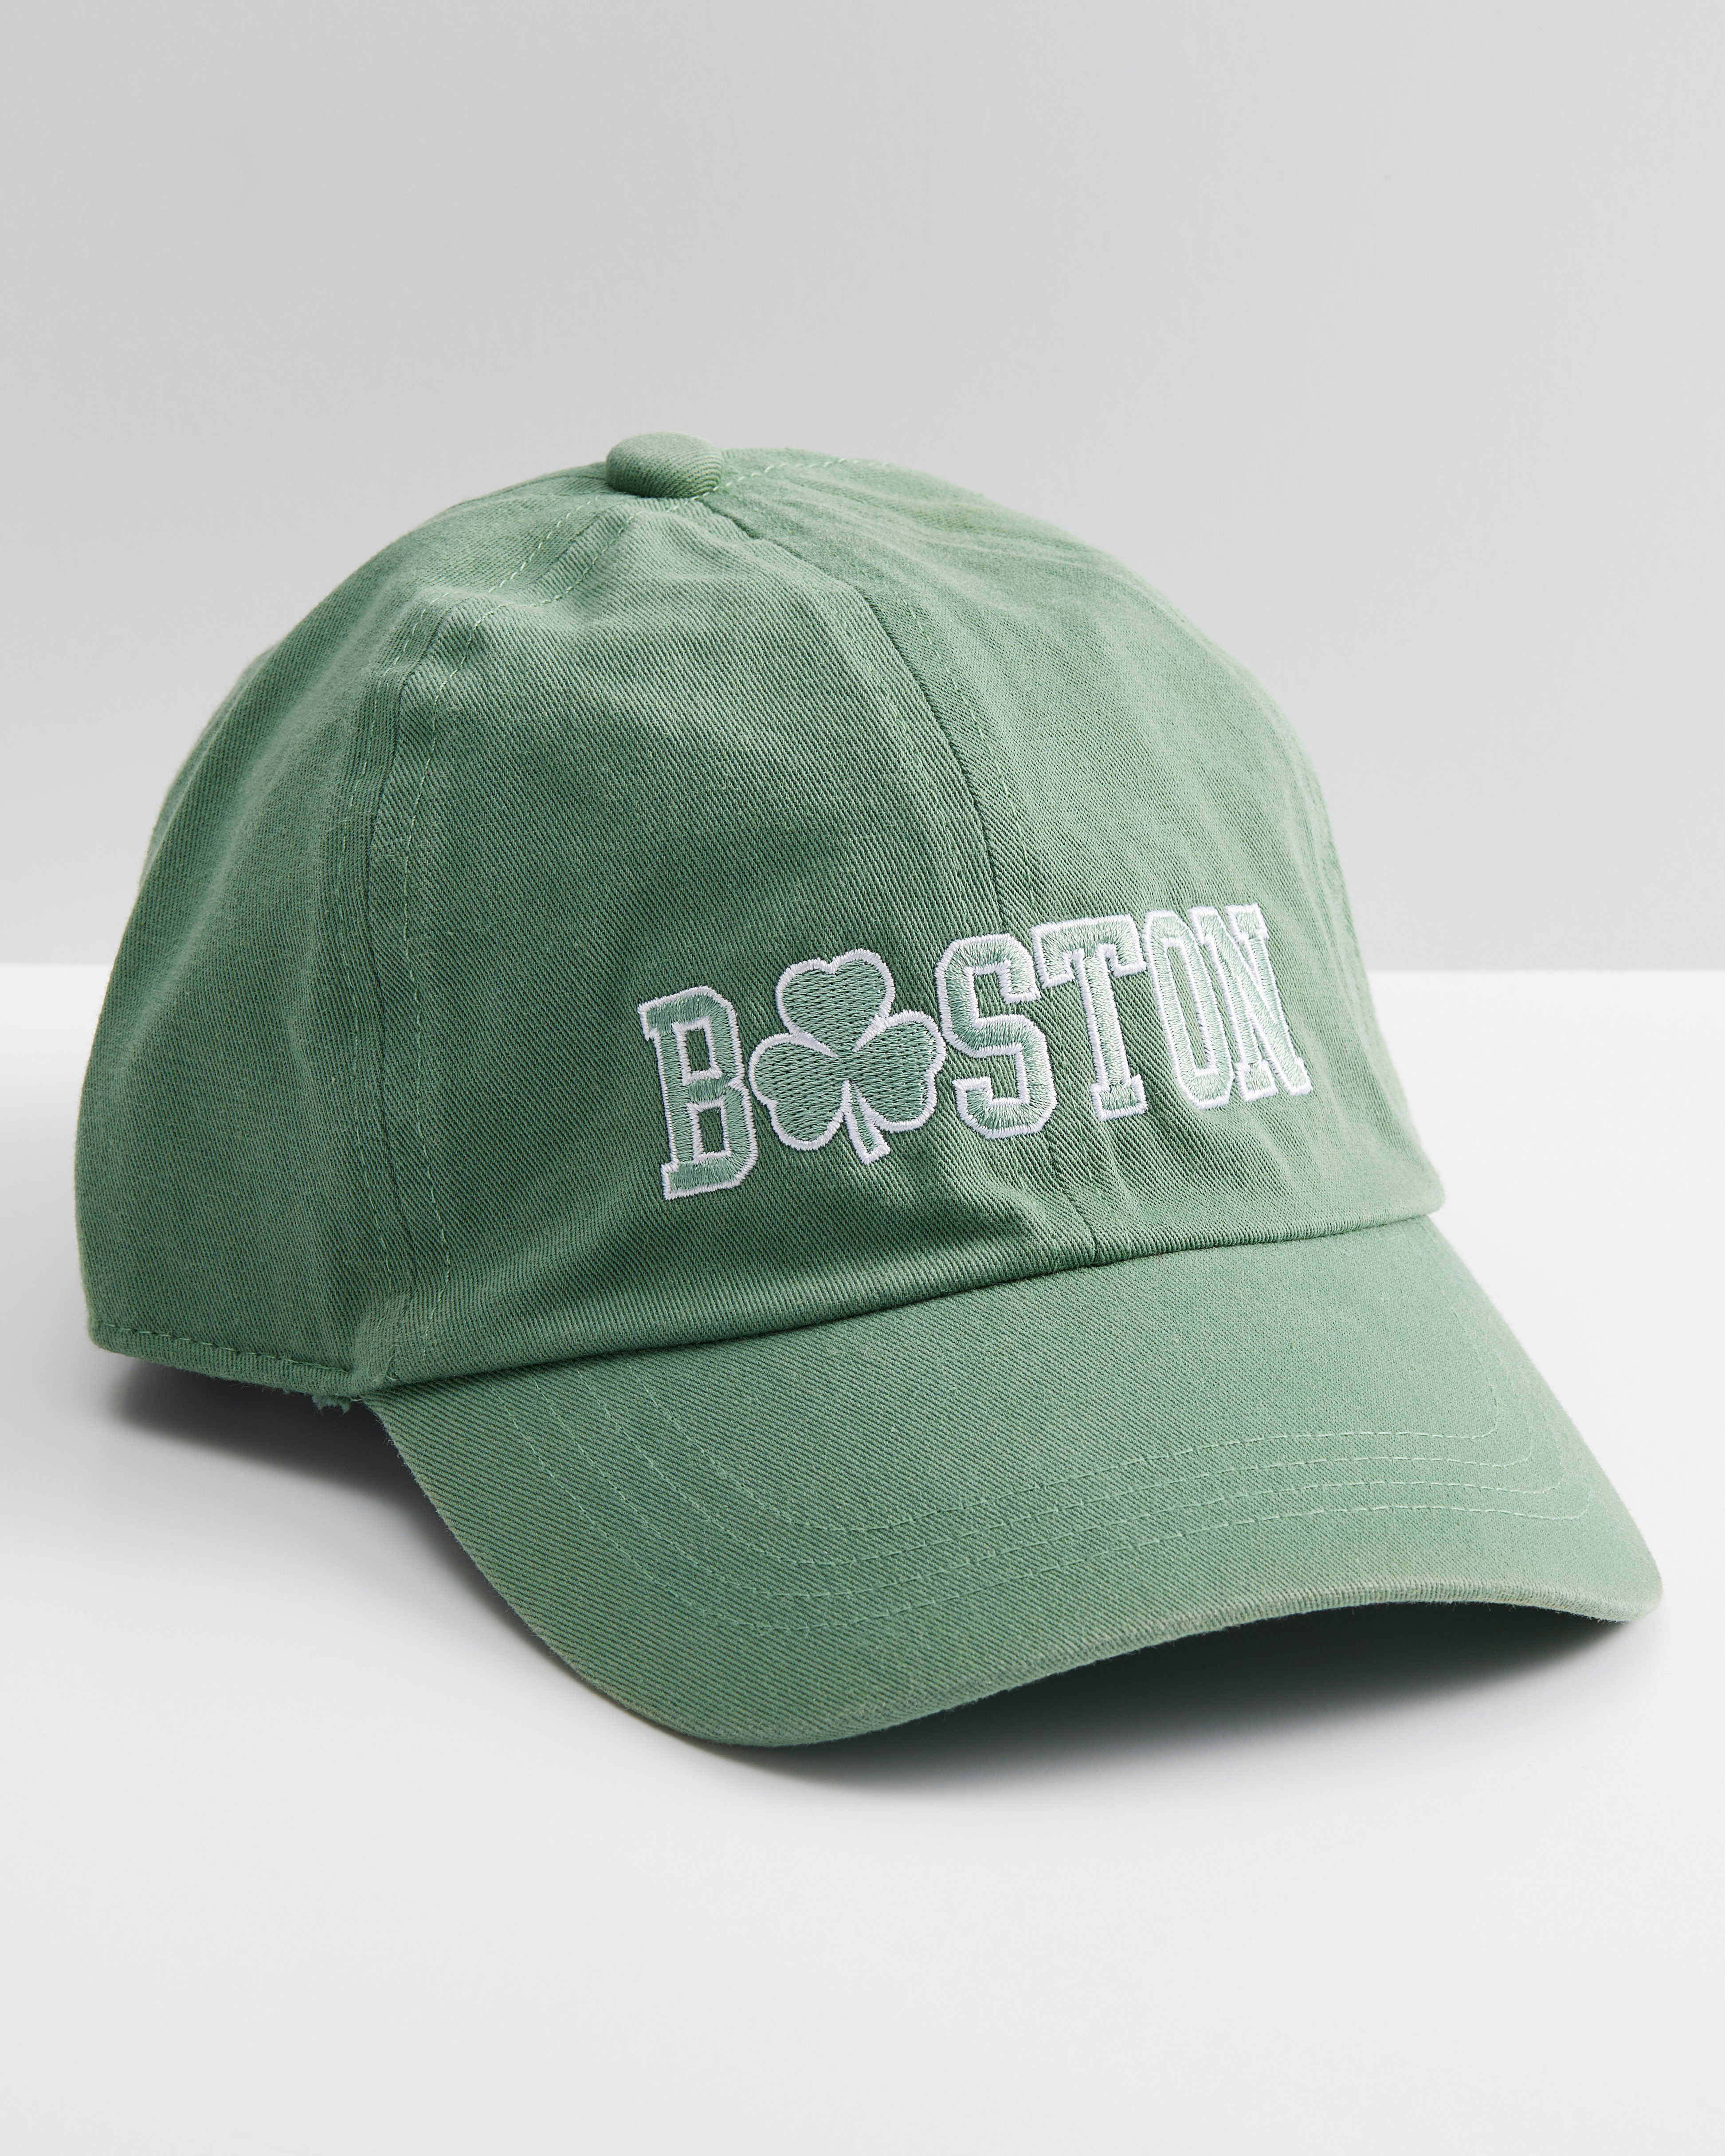 COD NY Cap High Quality Cotton Fashion Hat Adustable Cap Baseball